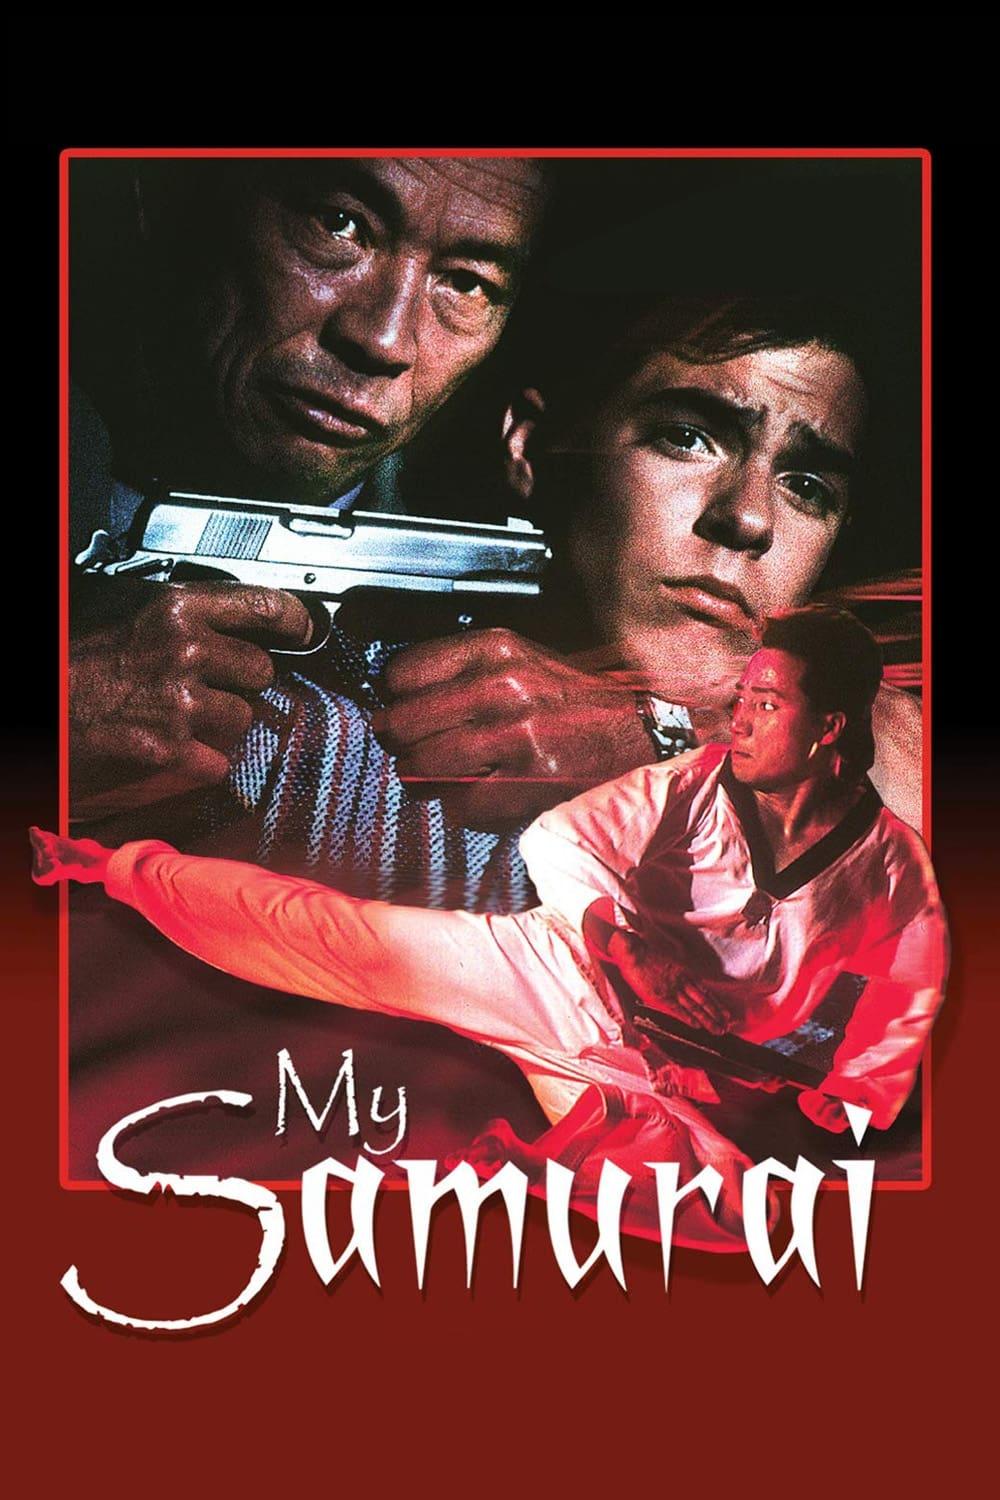 My Samurai poster